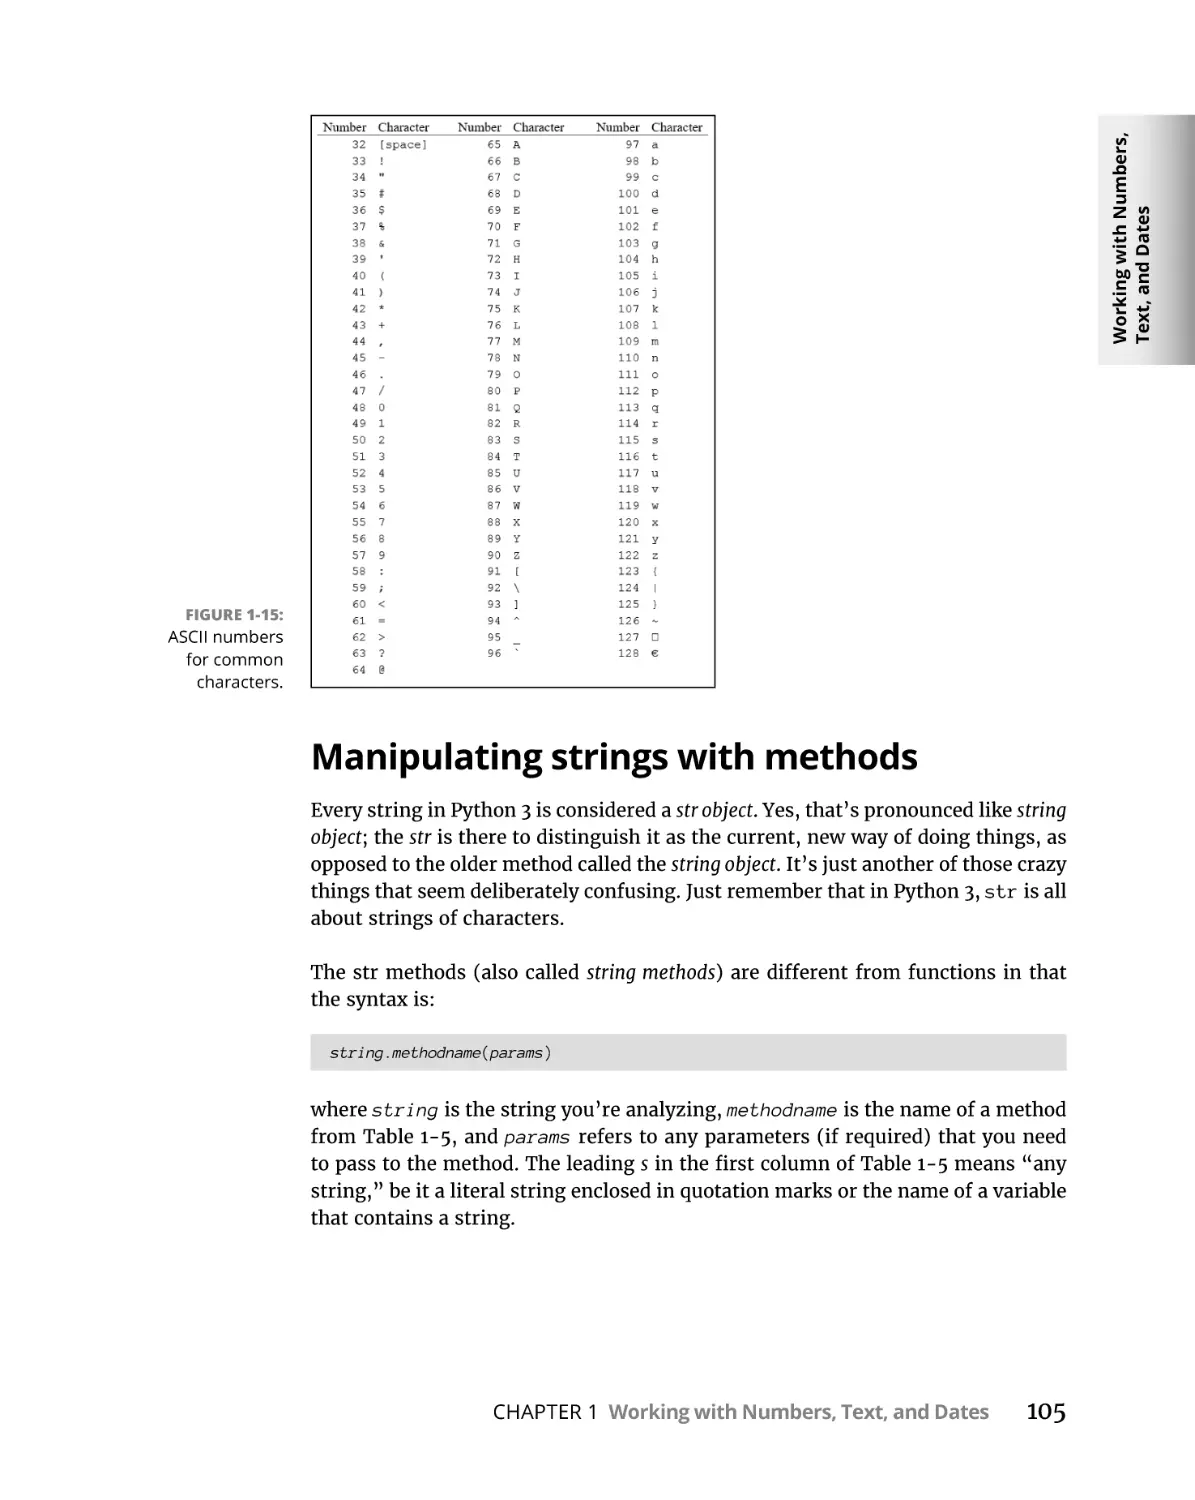 Manipulating strings with methods